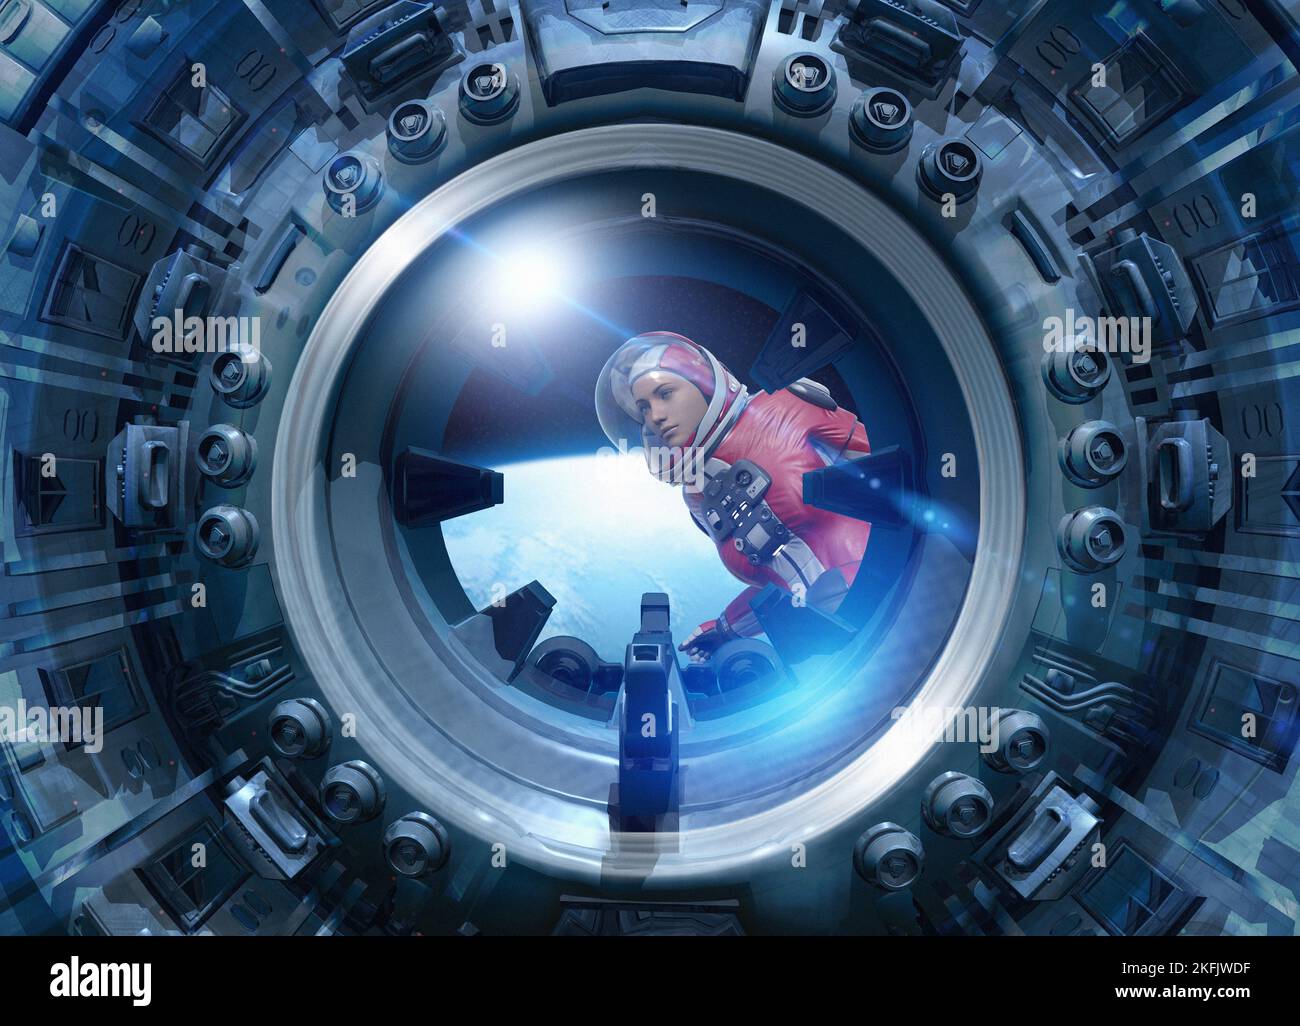 Astronaut looking into the window of spaceship, illustration Stock Photo